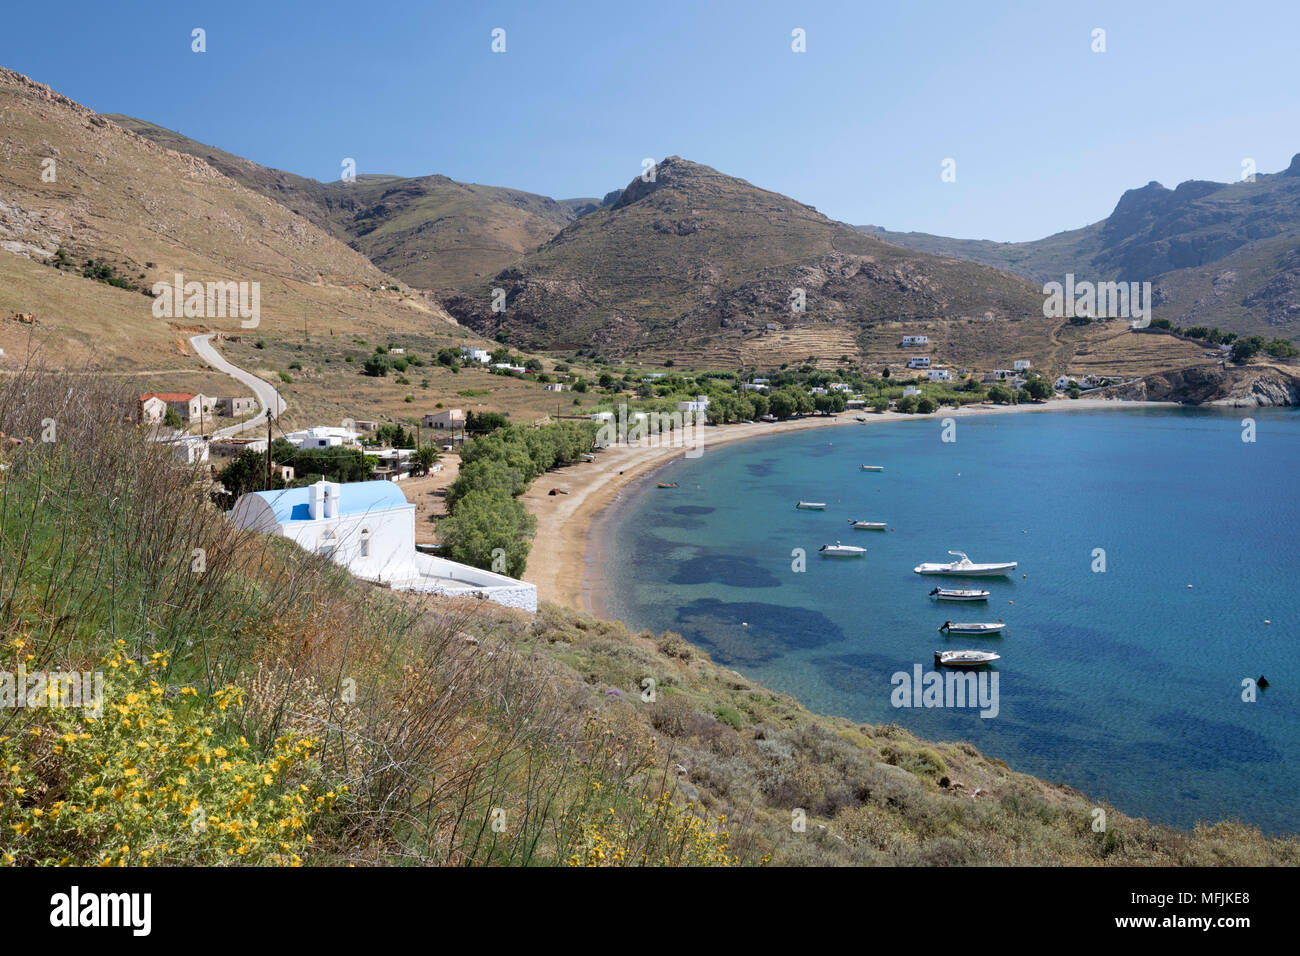 View over Koutalas bay and beach on island's south east coast, Serifos, Cyclades, Aegean Sea, Greek Islands, Greece, Europe Stock Photo